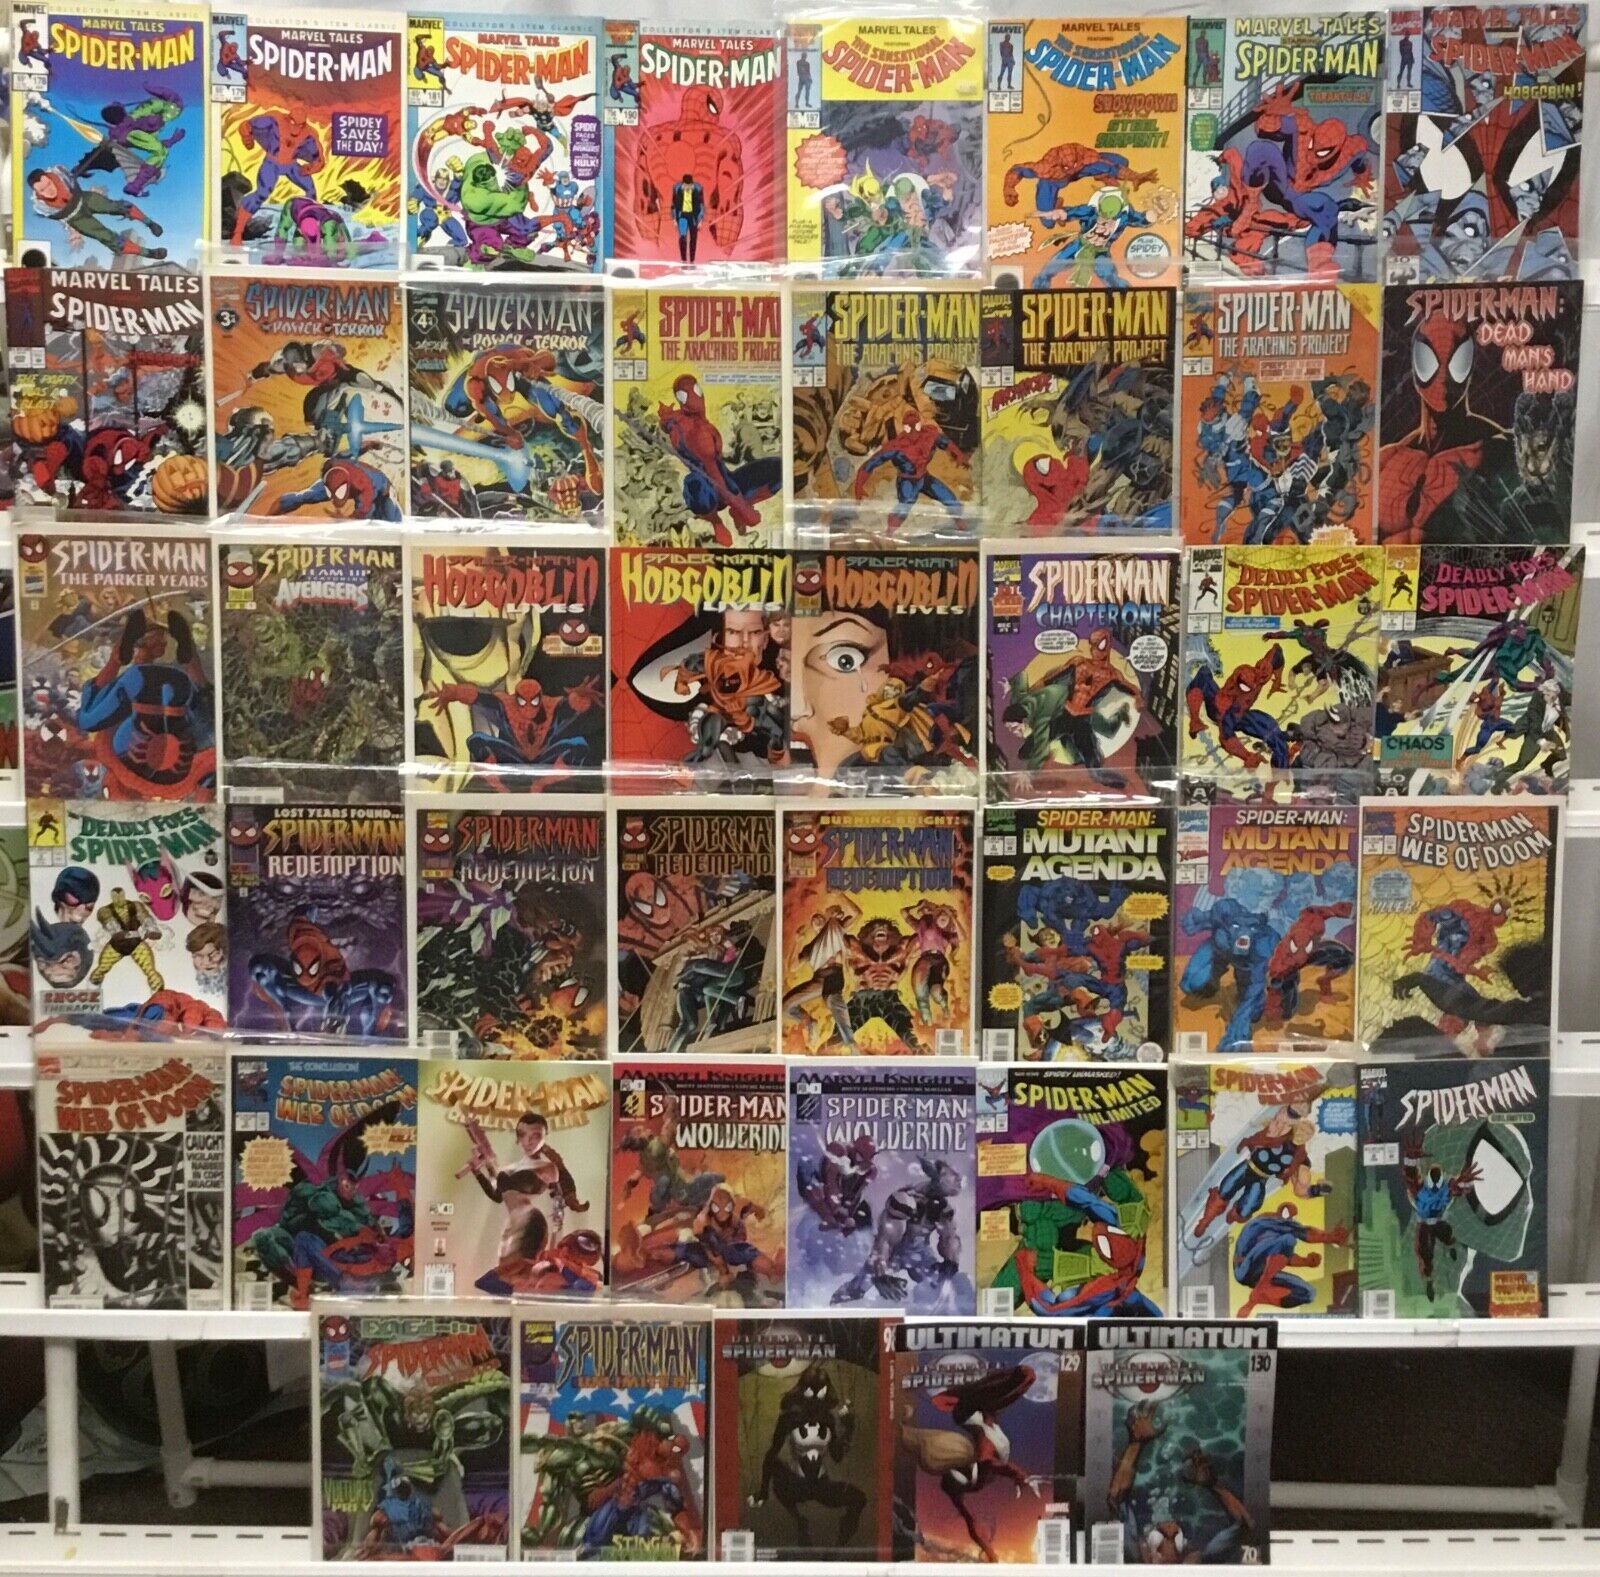 Marvel Comics Spider-Man Comic Book Lot of 45 - Marvel Tales, Agenda, Redemption